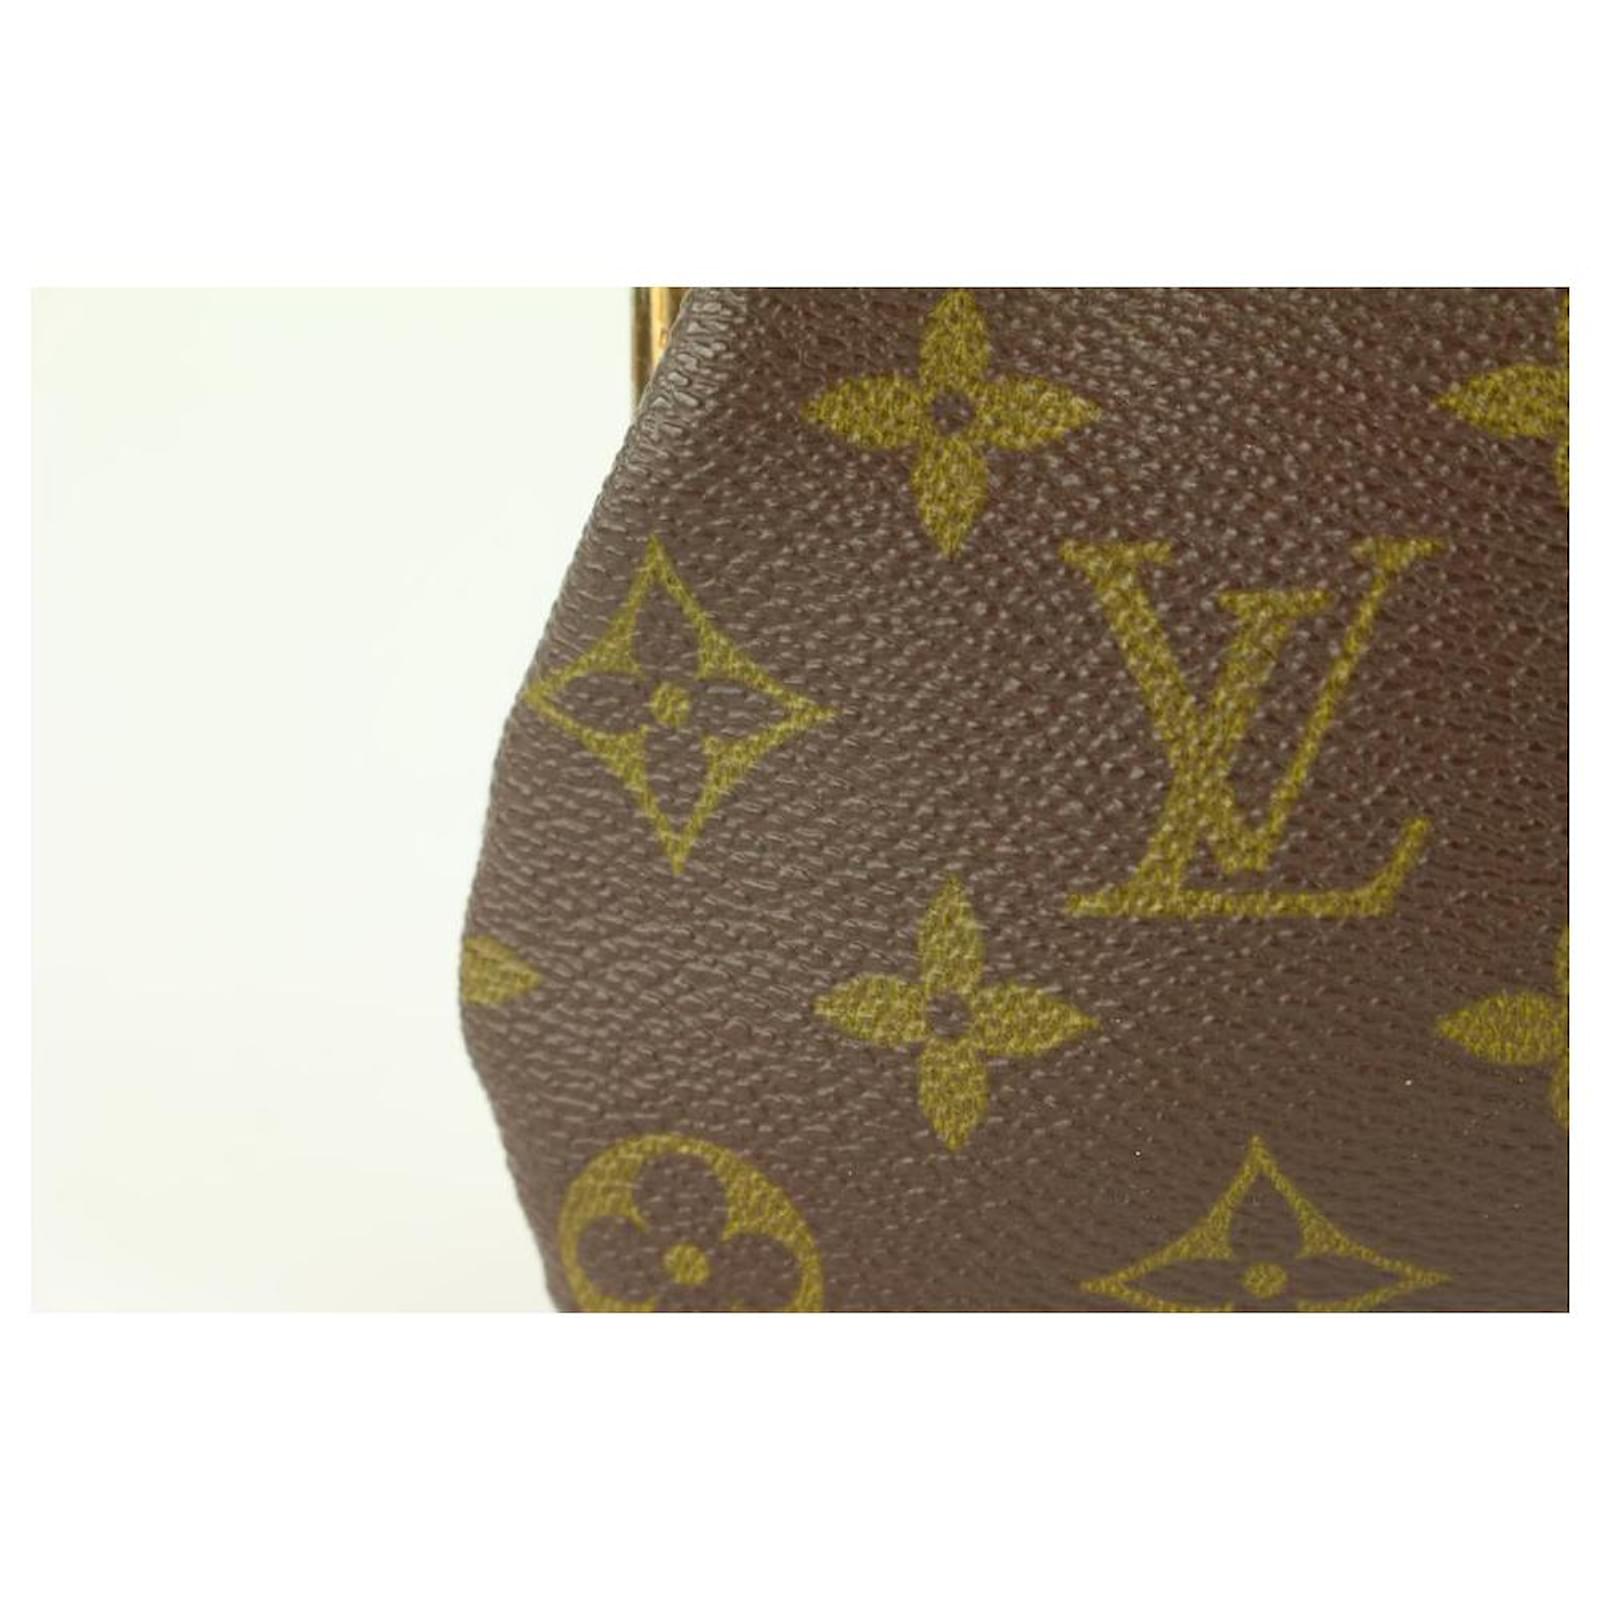 Louis Vuitton Monogram French Twist Purse